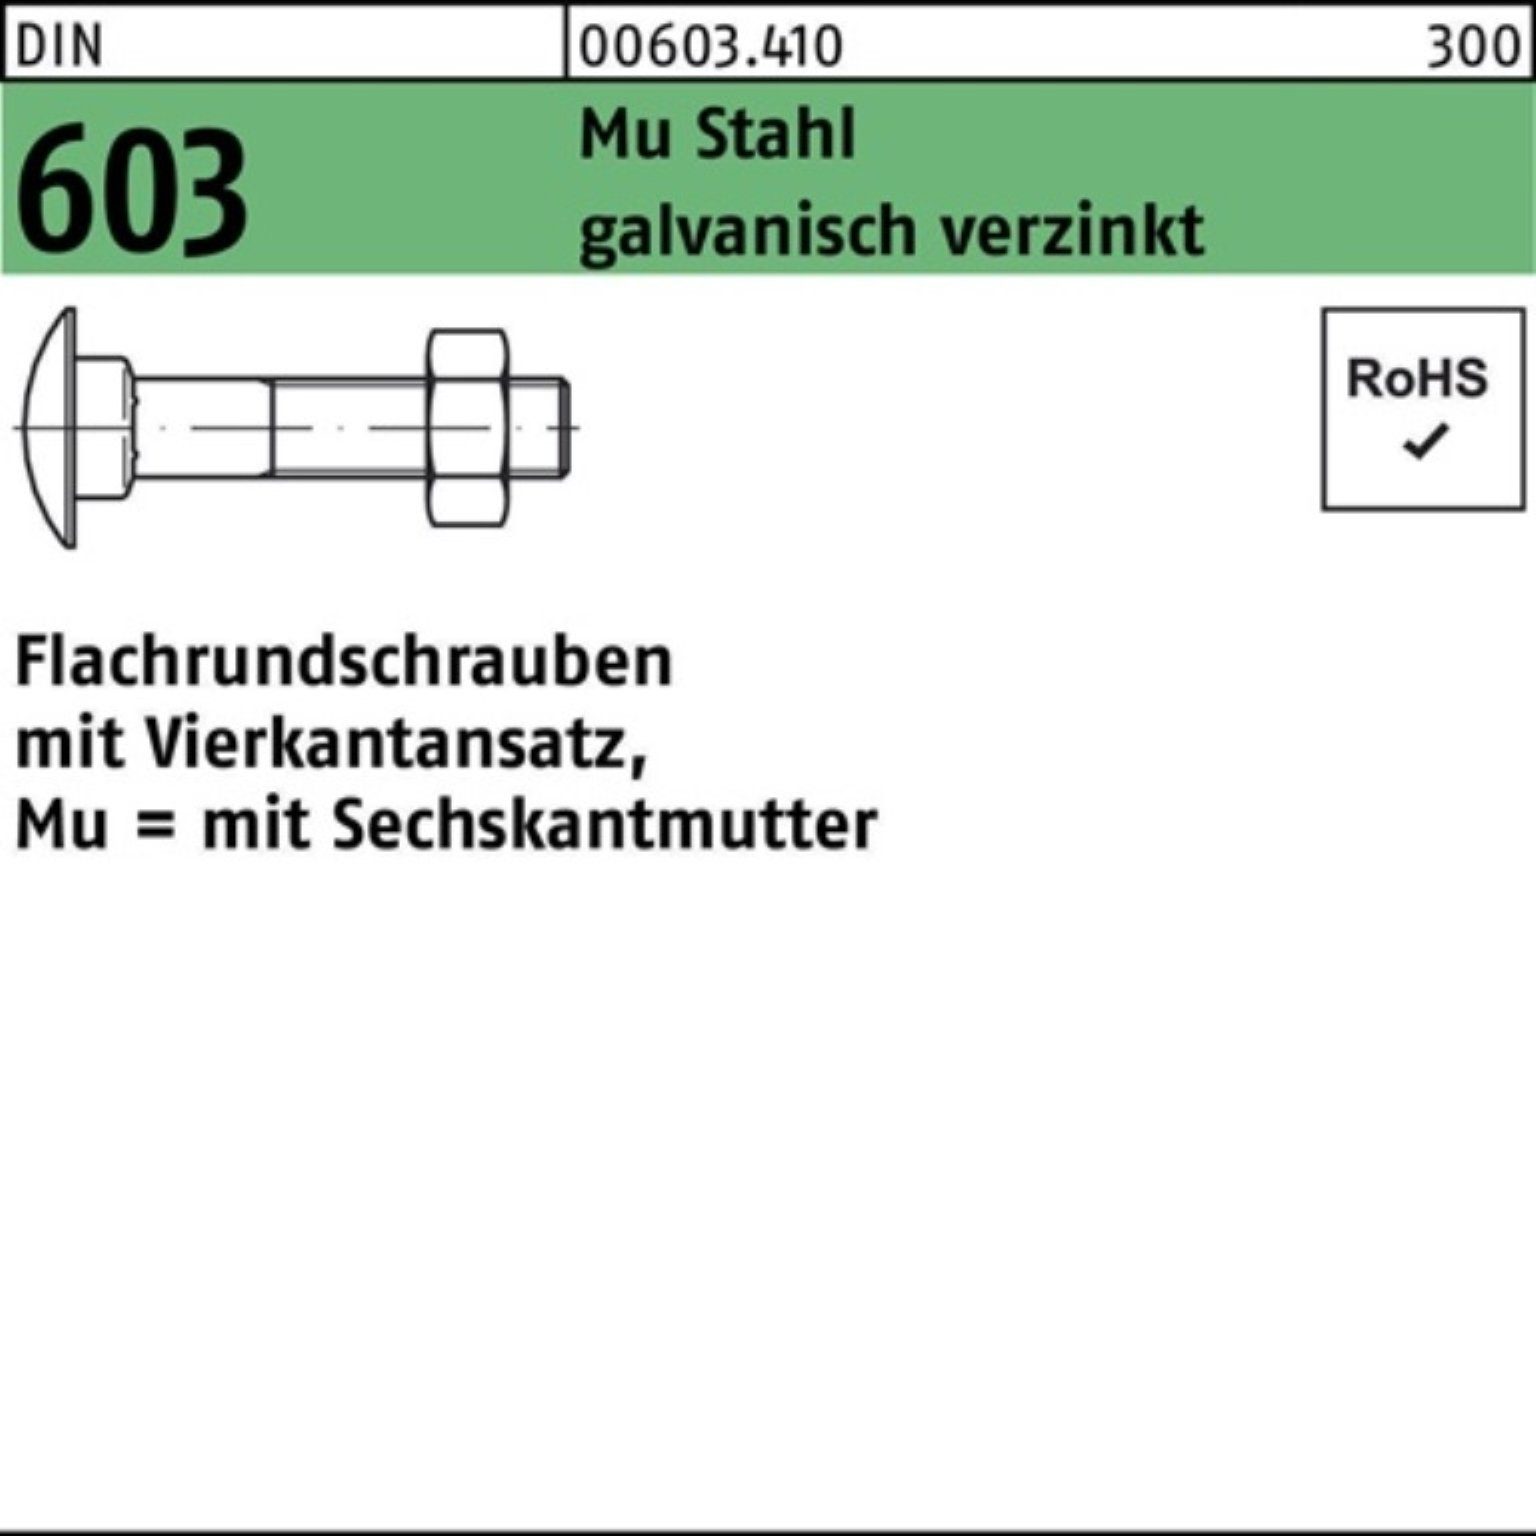 Reyher Pack DIN 200er Vierkantansatz/6-ktmutter Flachrundschraube Schraube M M8x55 603